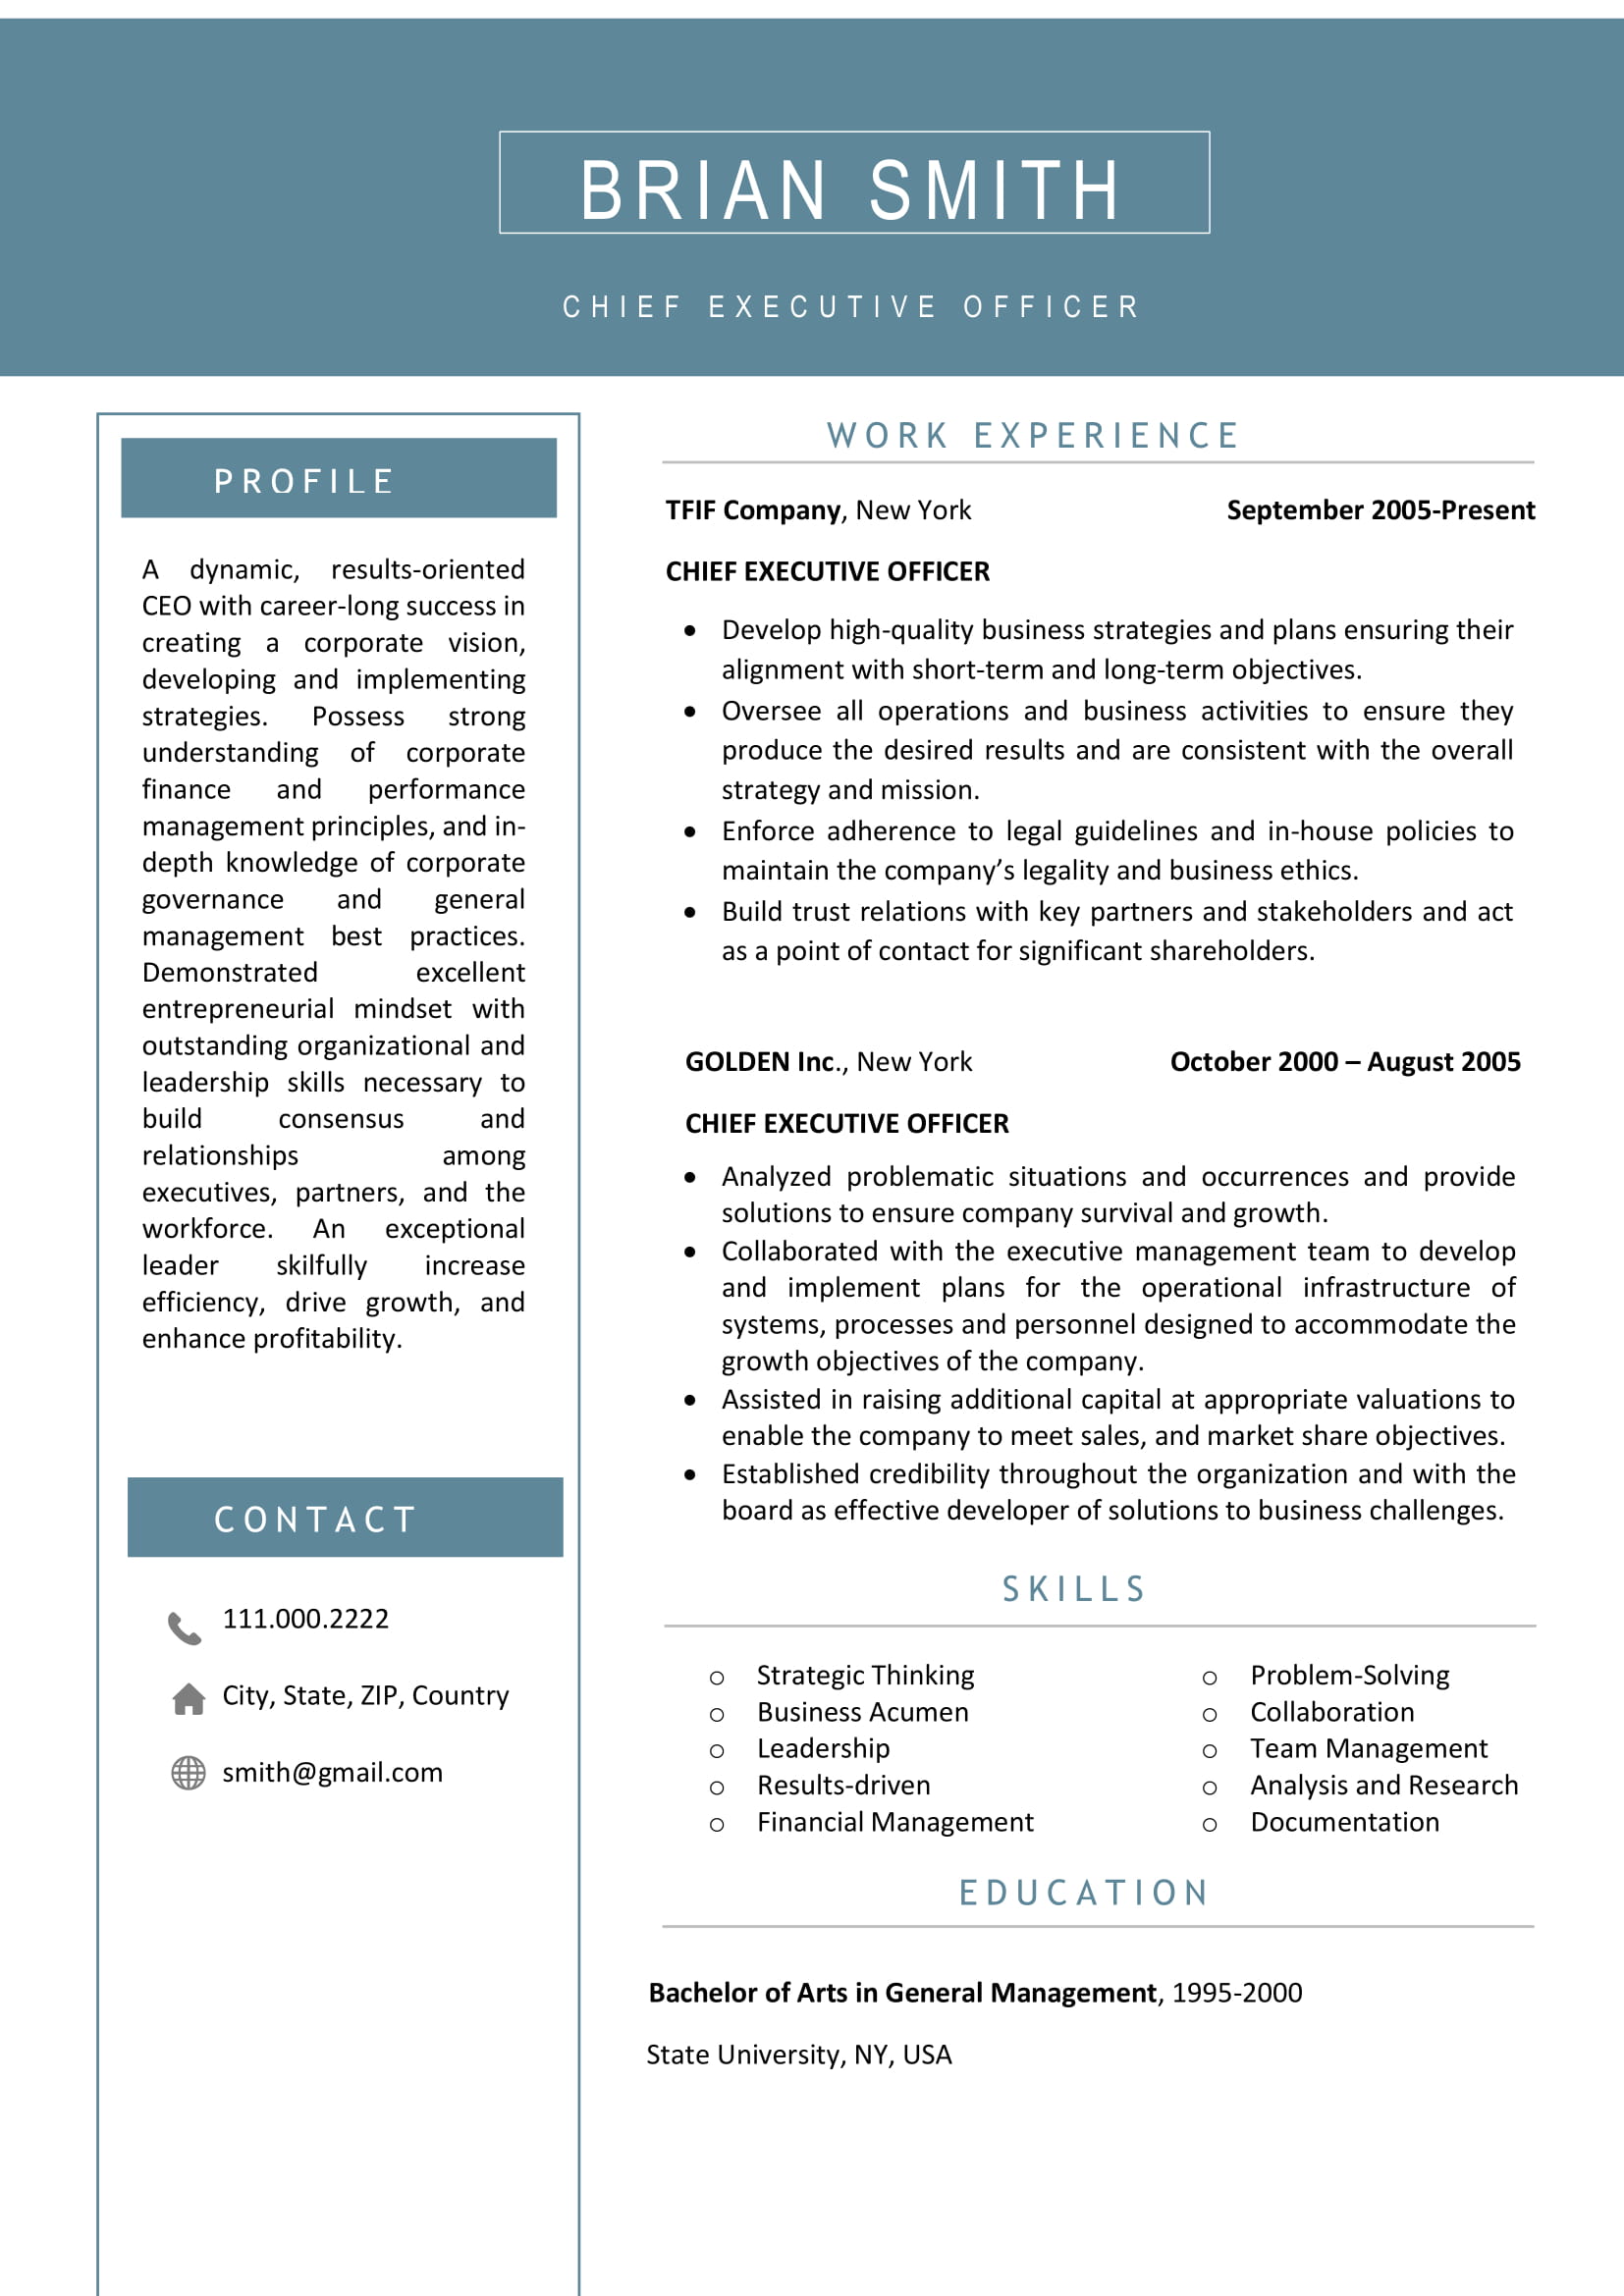 linkedin resume writing service